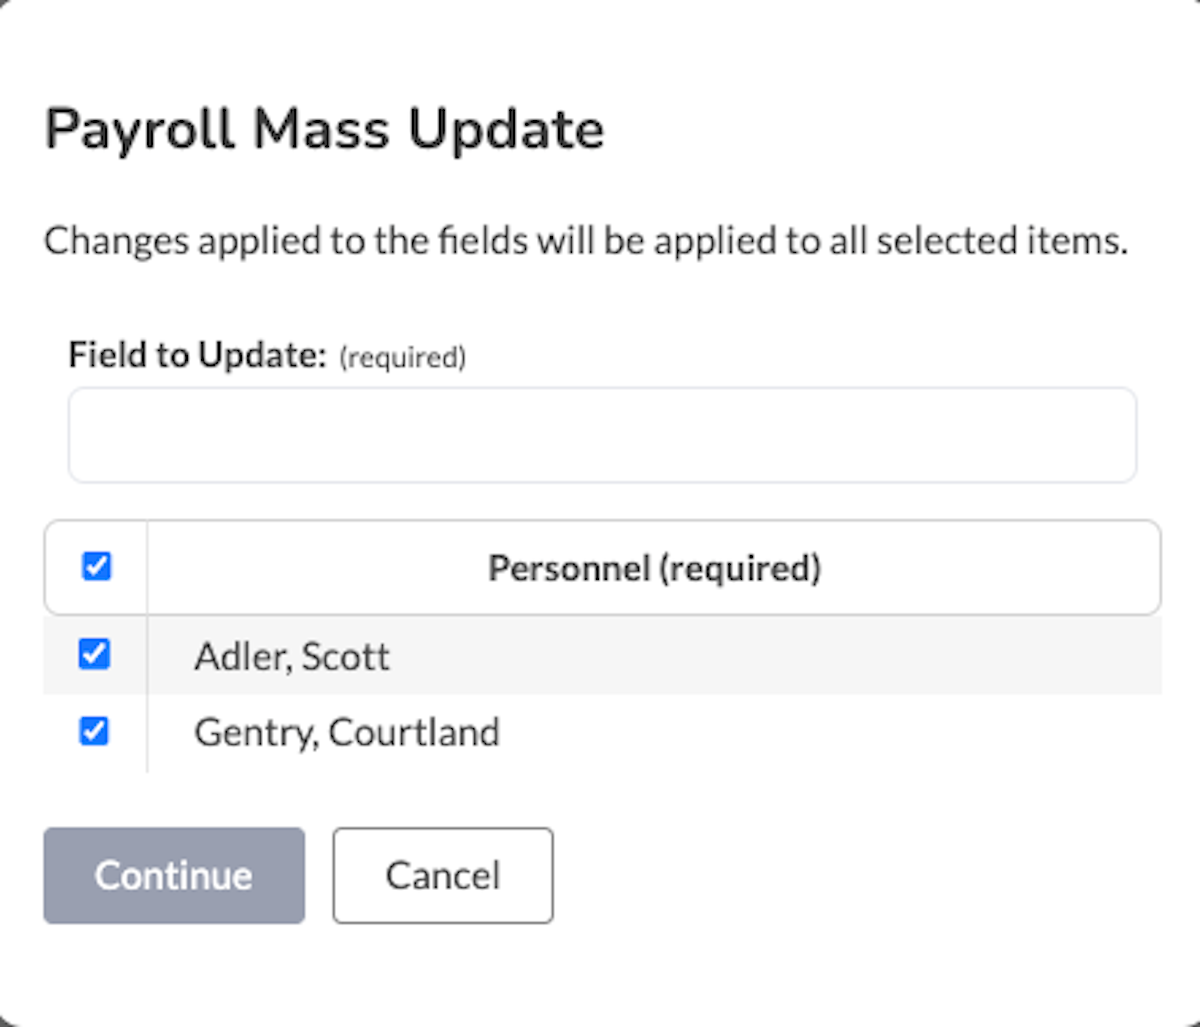 The Payroll Mass Update window will appear.